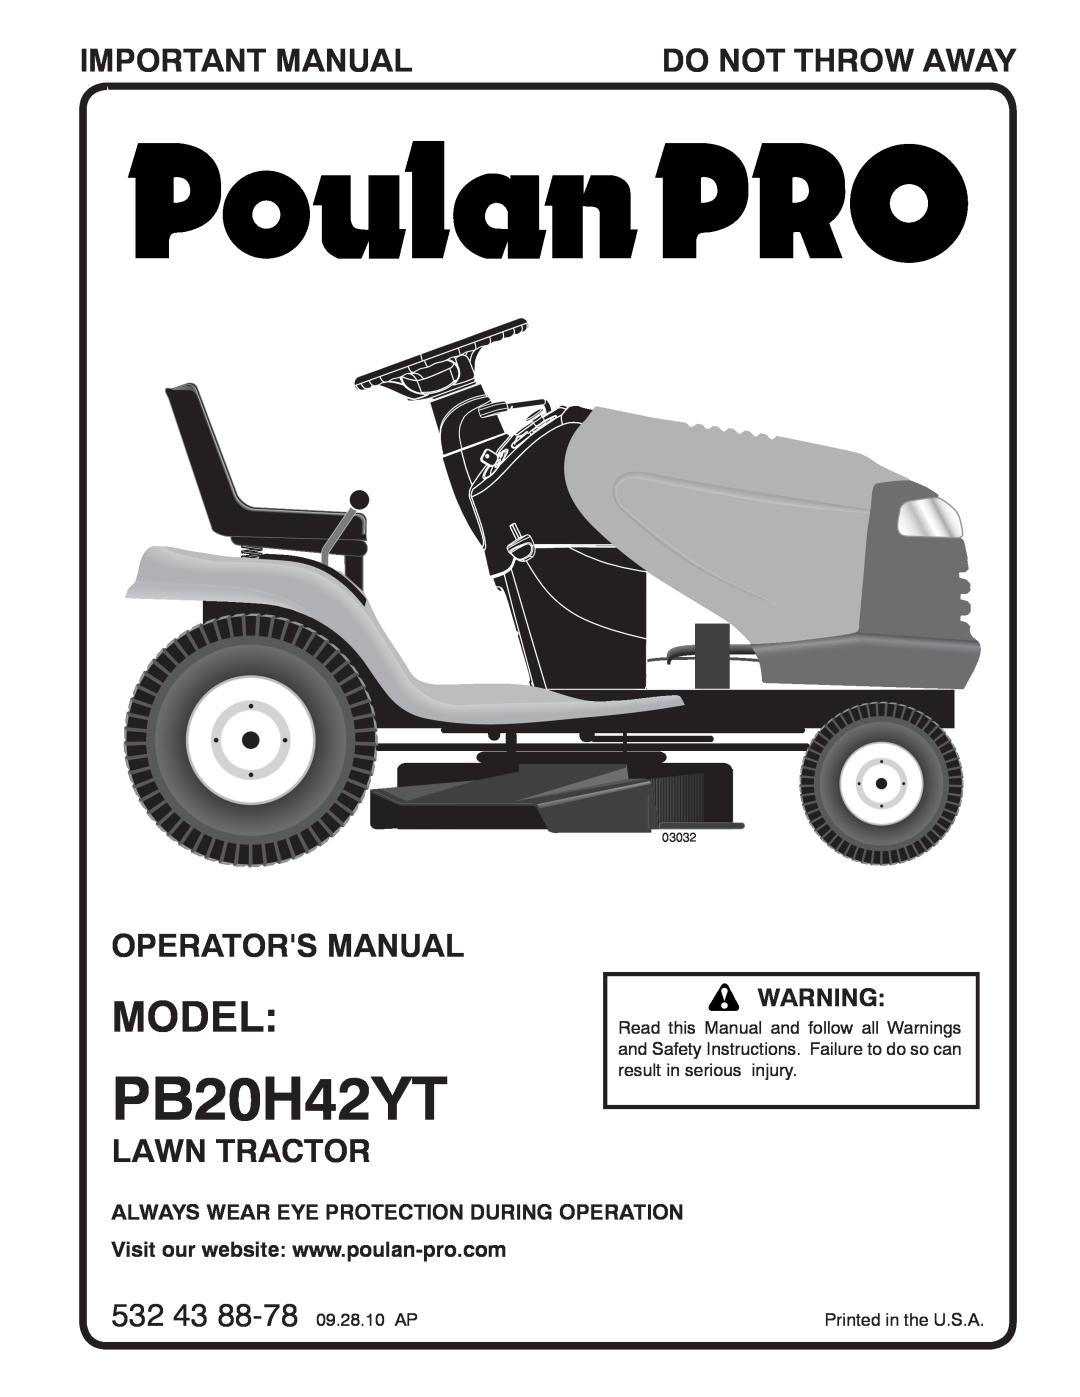 Poulan 96048000500 manual Model, Important Manual, Do Not Throw Away, Operators Manual, Lawn Tractor, PB20H42YT,  